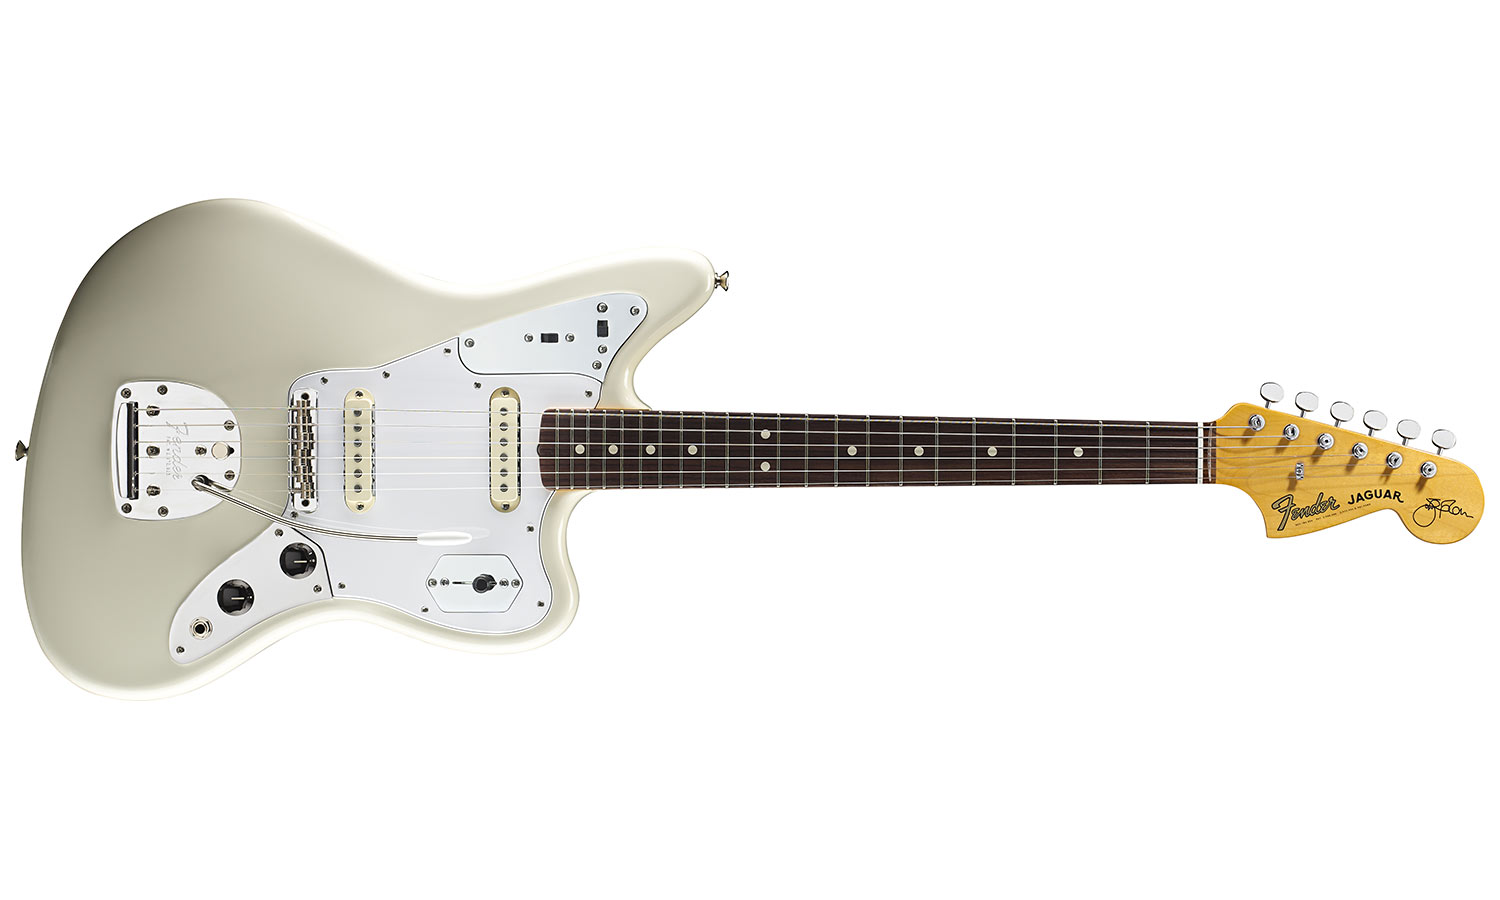 Fender Jaguar Johnny Marr Artist Usa Rw 2016 - Olympic White - Retro rock electric guitar - Variation 1